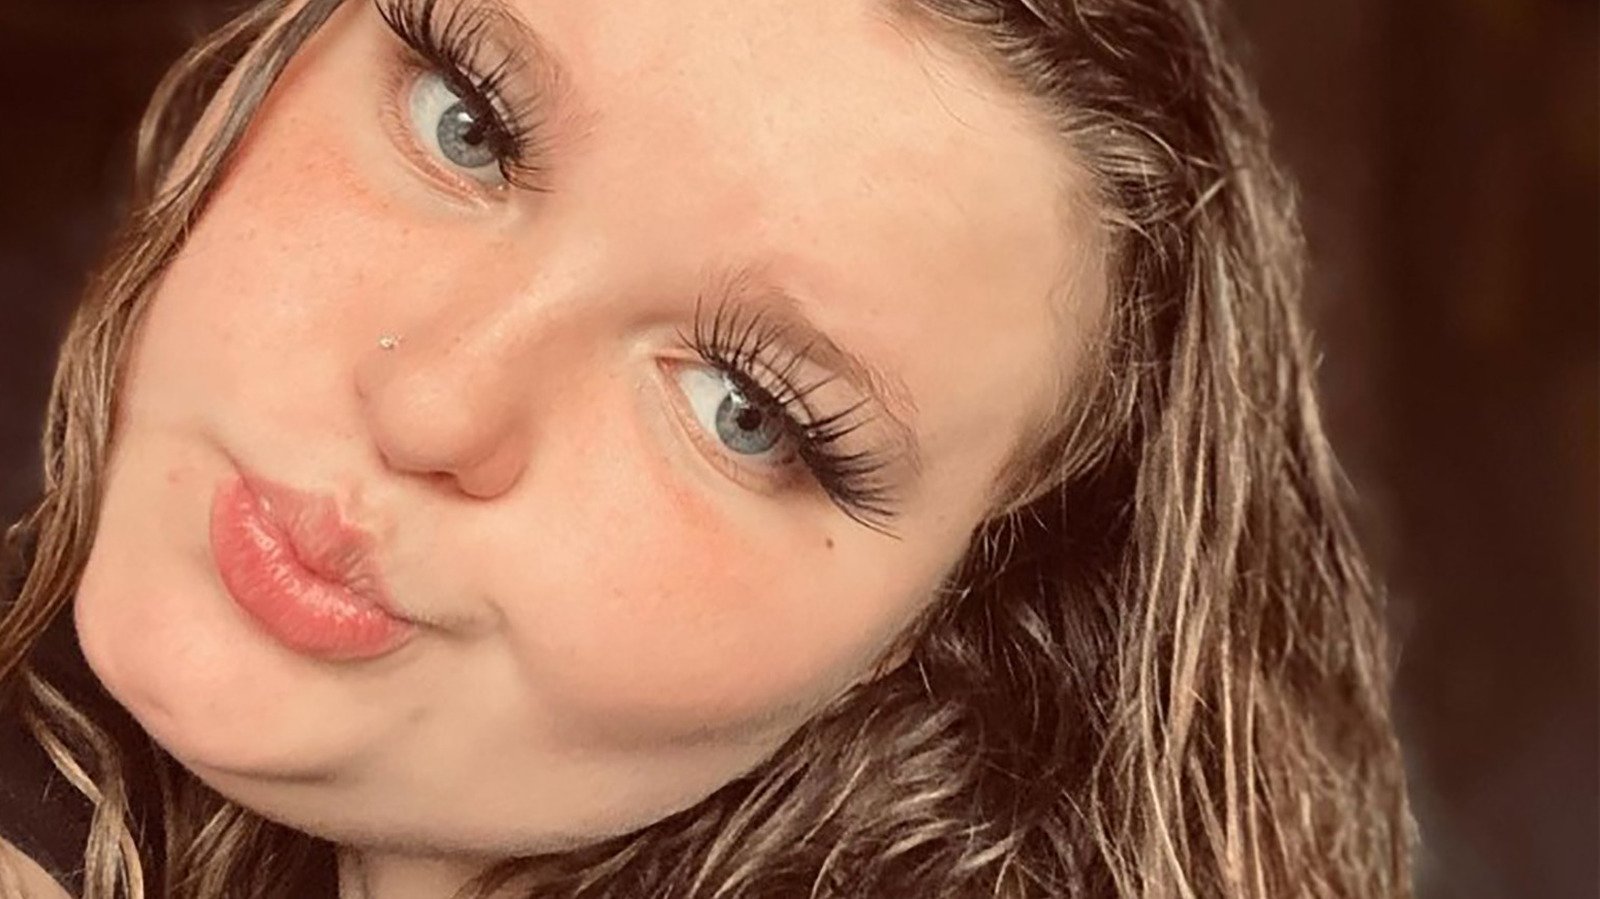 Honey Boo Boo's Latest Instagram Pics Are Raising Eyebrows